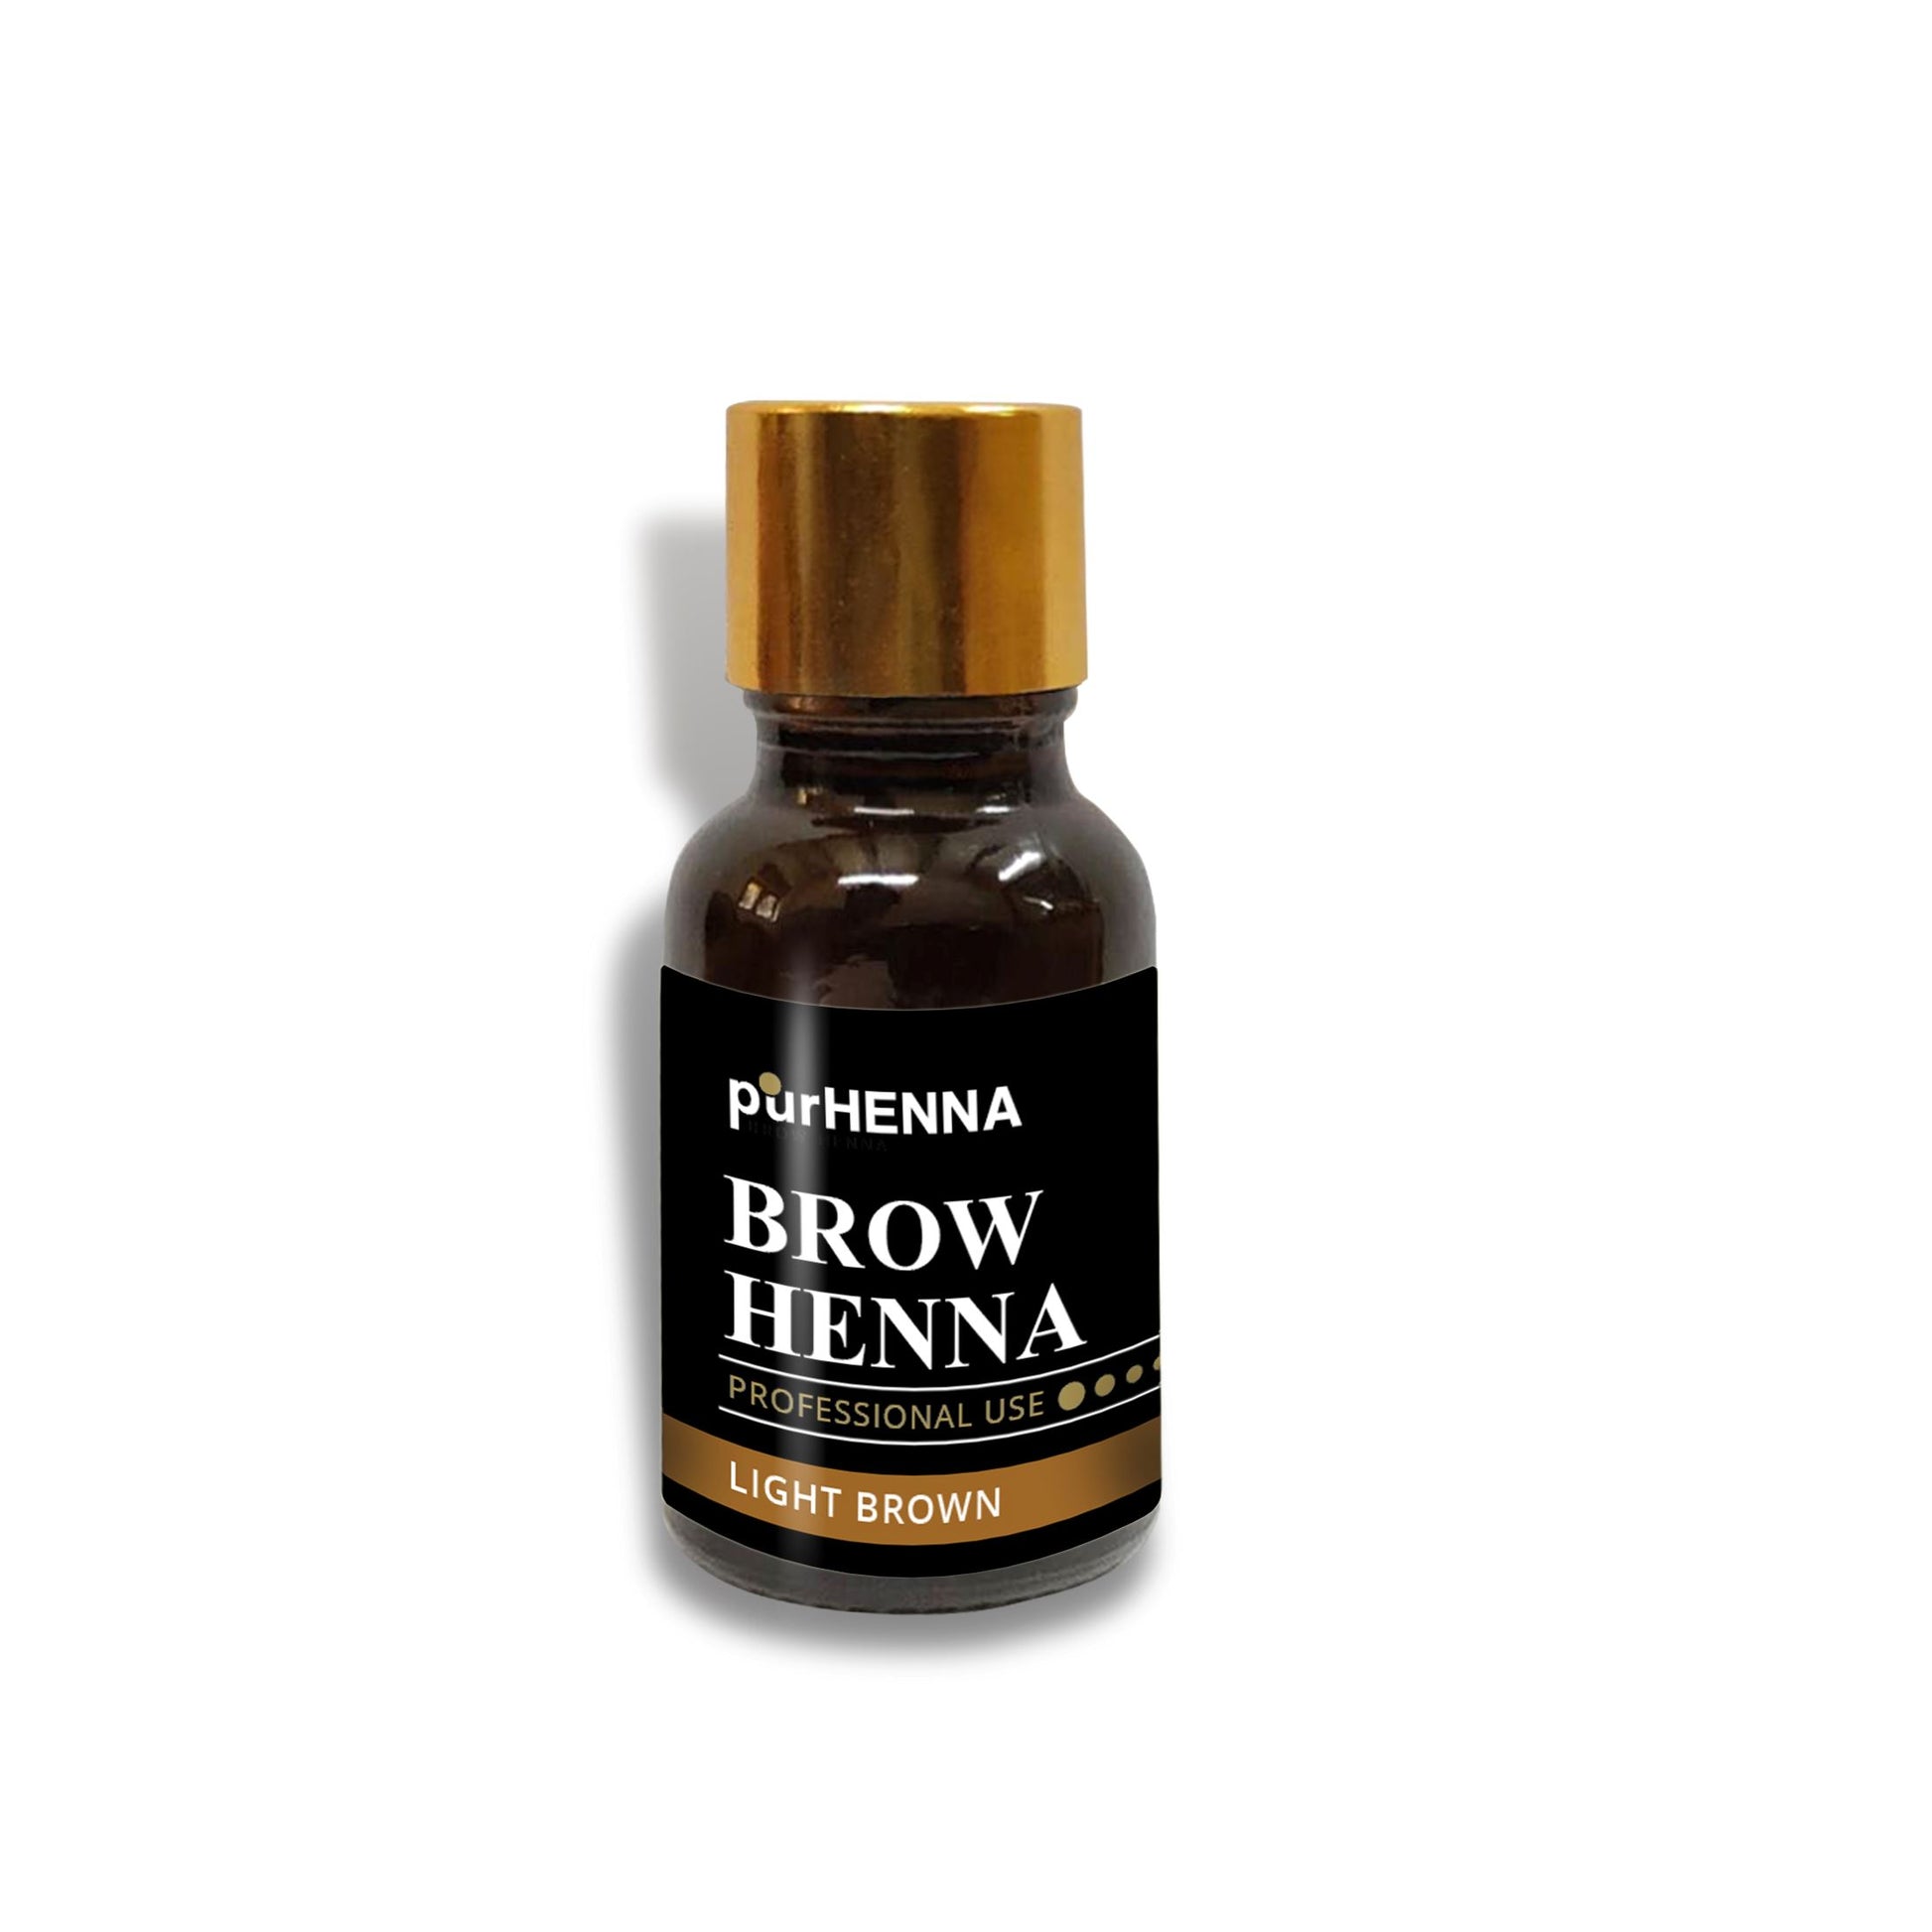 PurHenna Brow Henna - Light Brown - Lash Kings